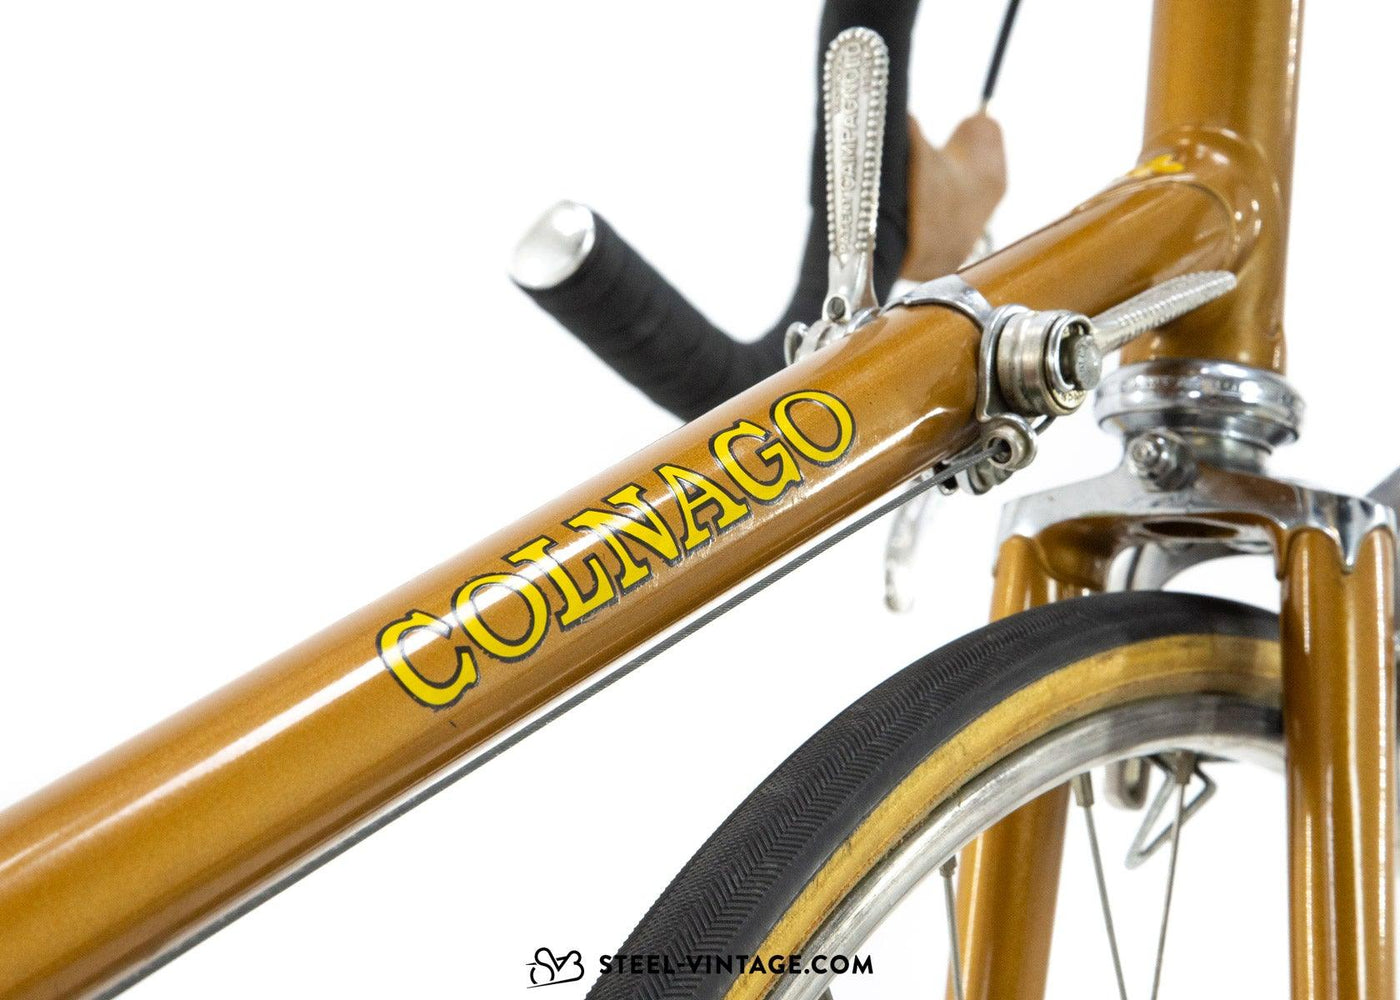 Colnago Super Pantografata Road Bicycle 1973 - Steel Vintage Bikes